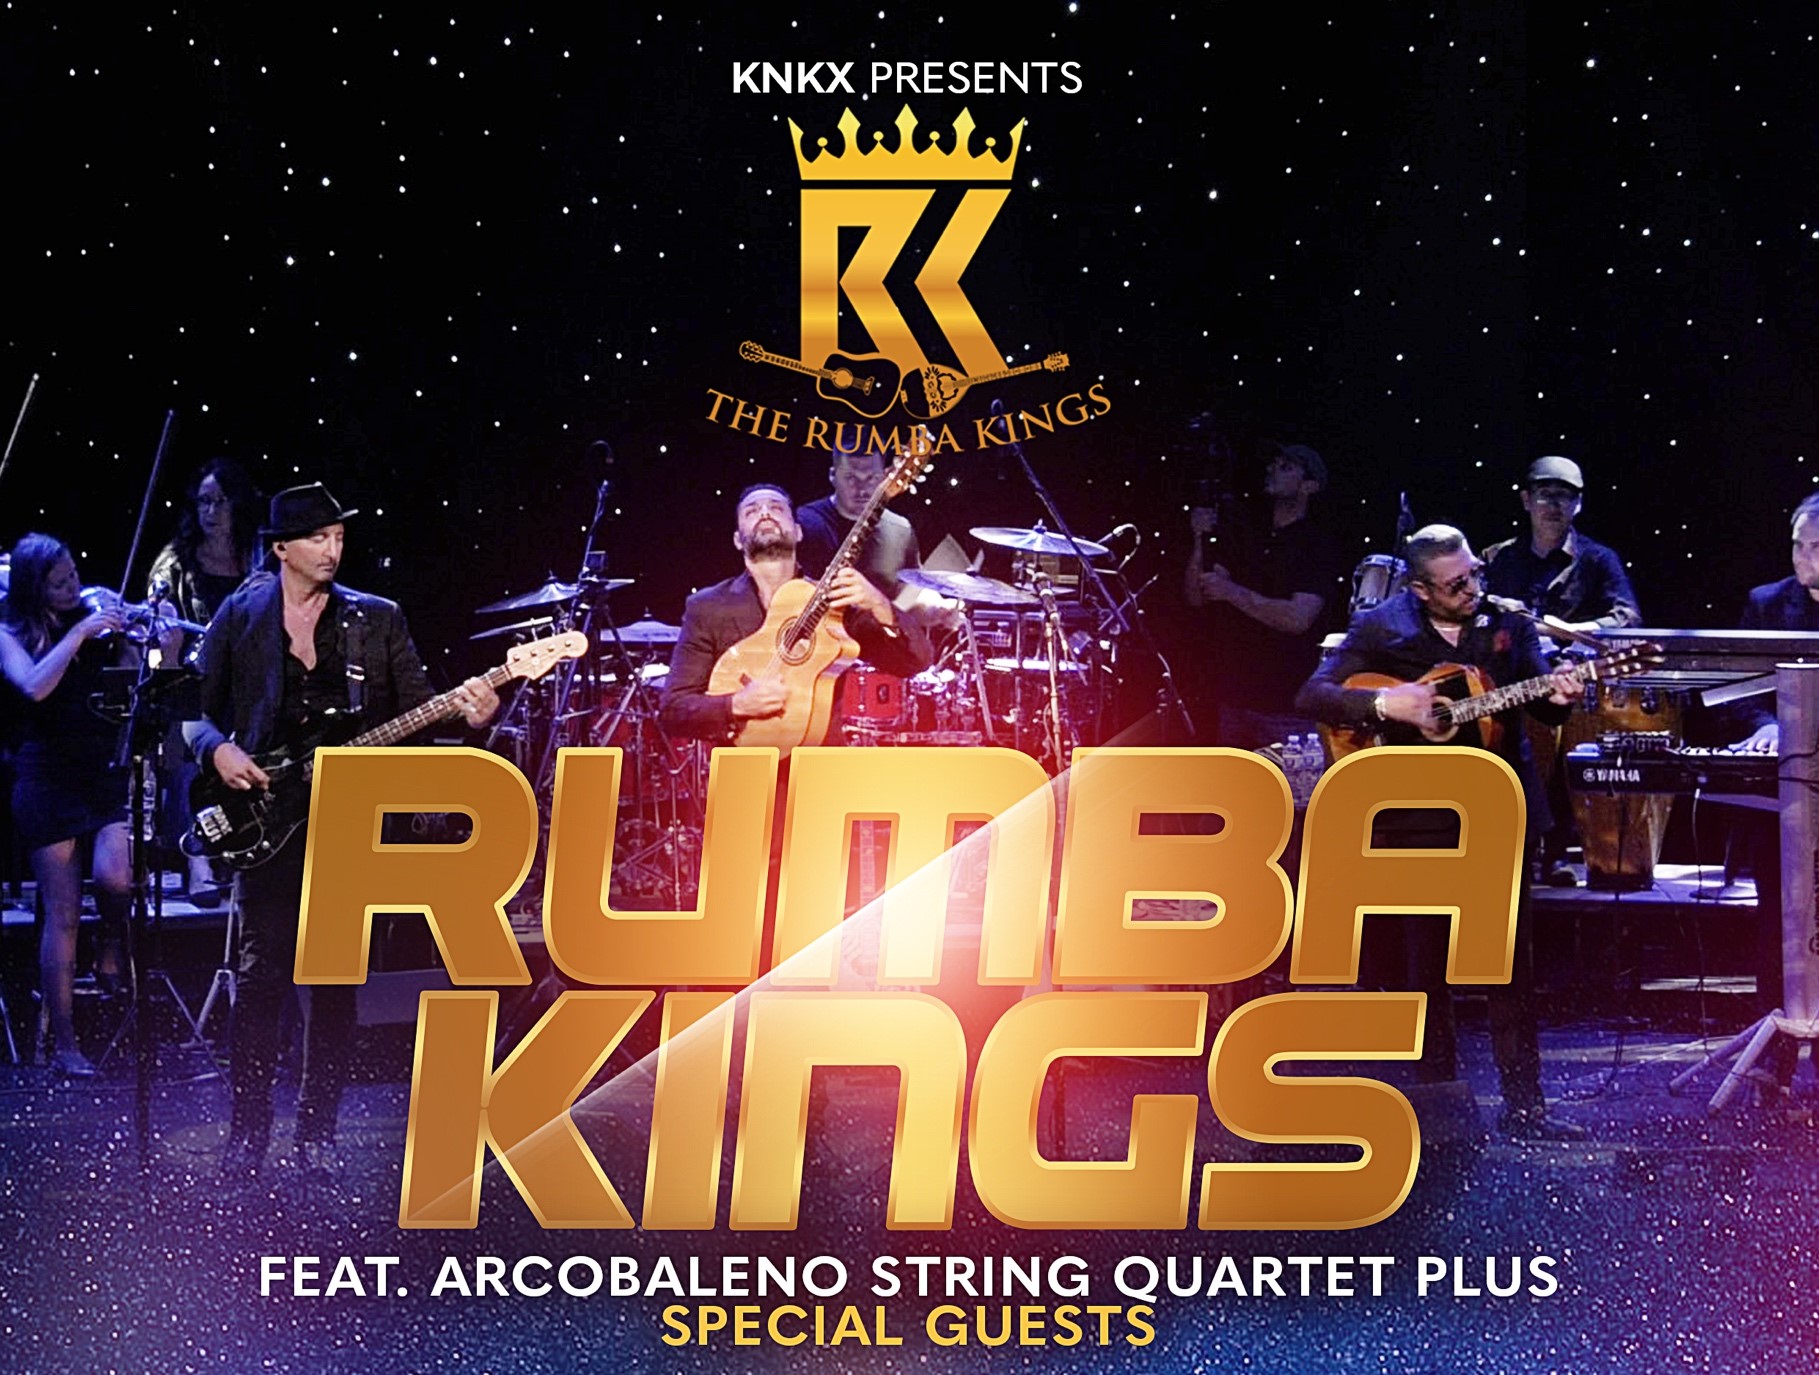 The Rumba Kings